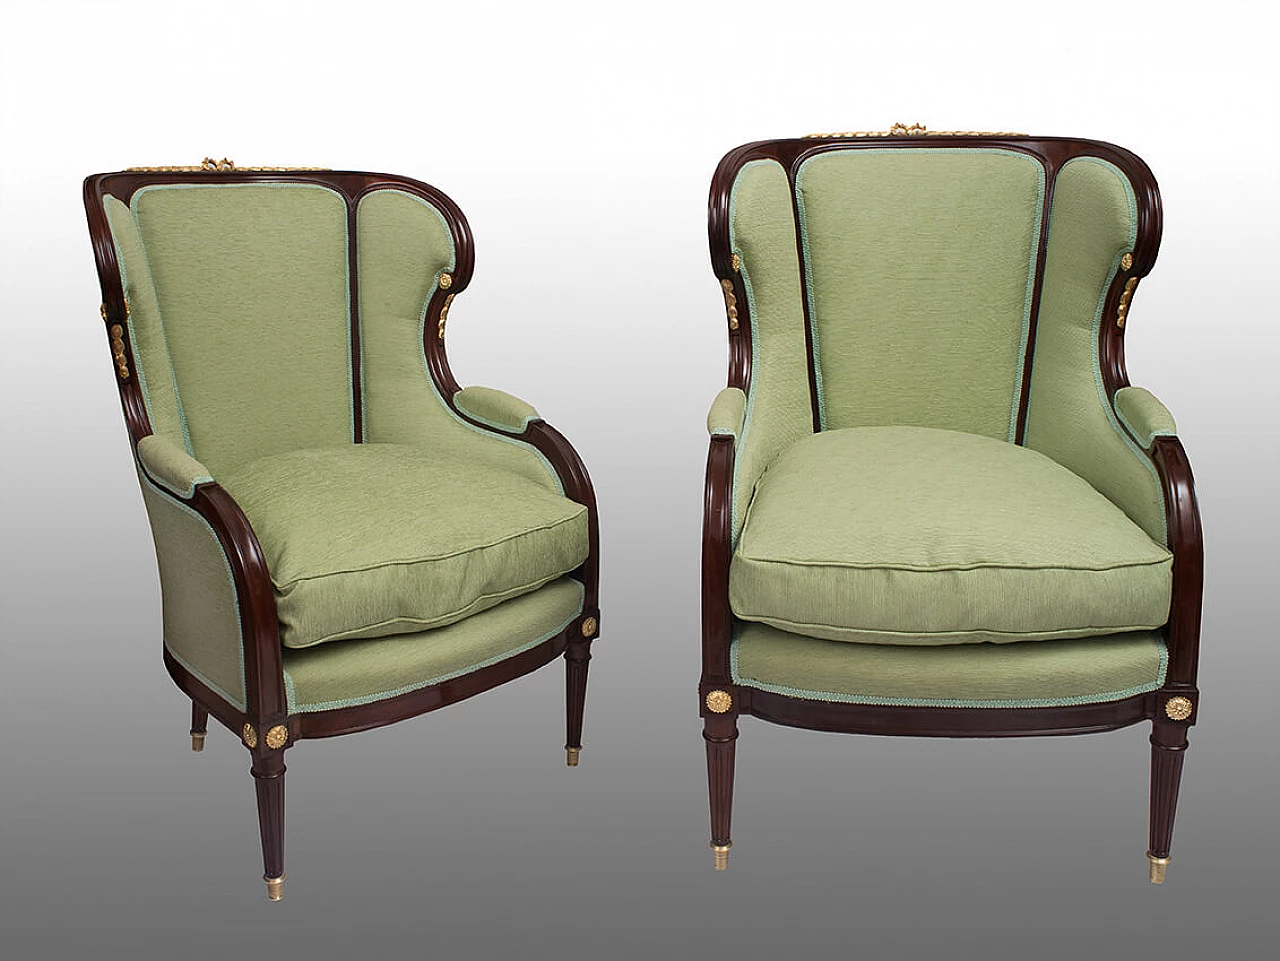 Pair of Napoleon III style armchairs in mahogany, 19th century 1469903